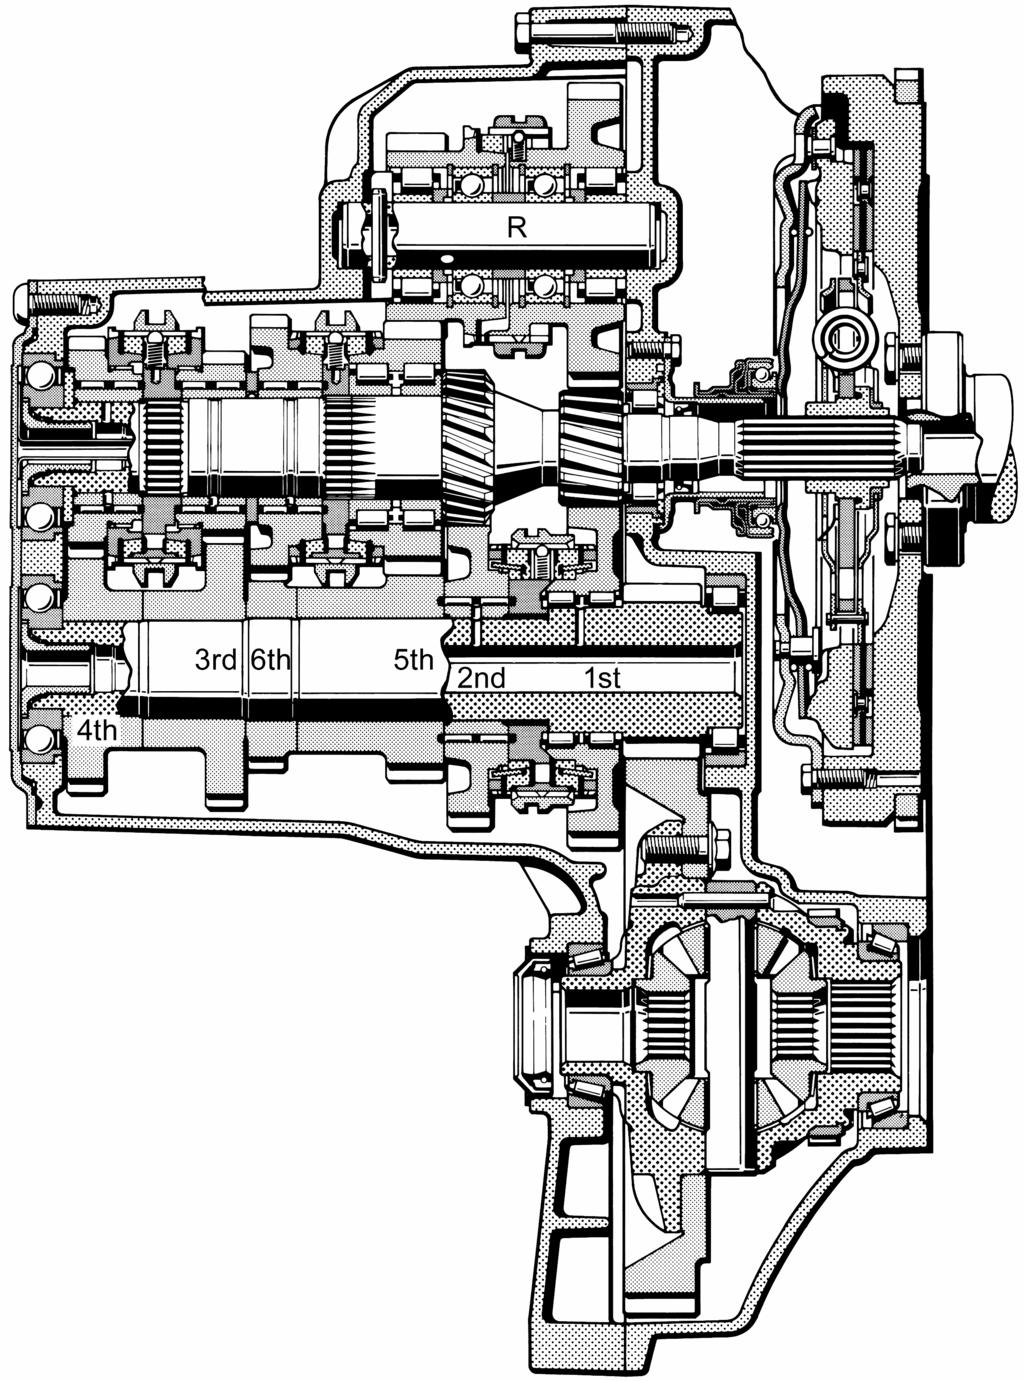 12.1 Passenger Car Transmissions 487 Fig. 12.6. 6-speed manual passenger car gearbox Opel F28-6, gearbox diagram Figure 6.